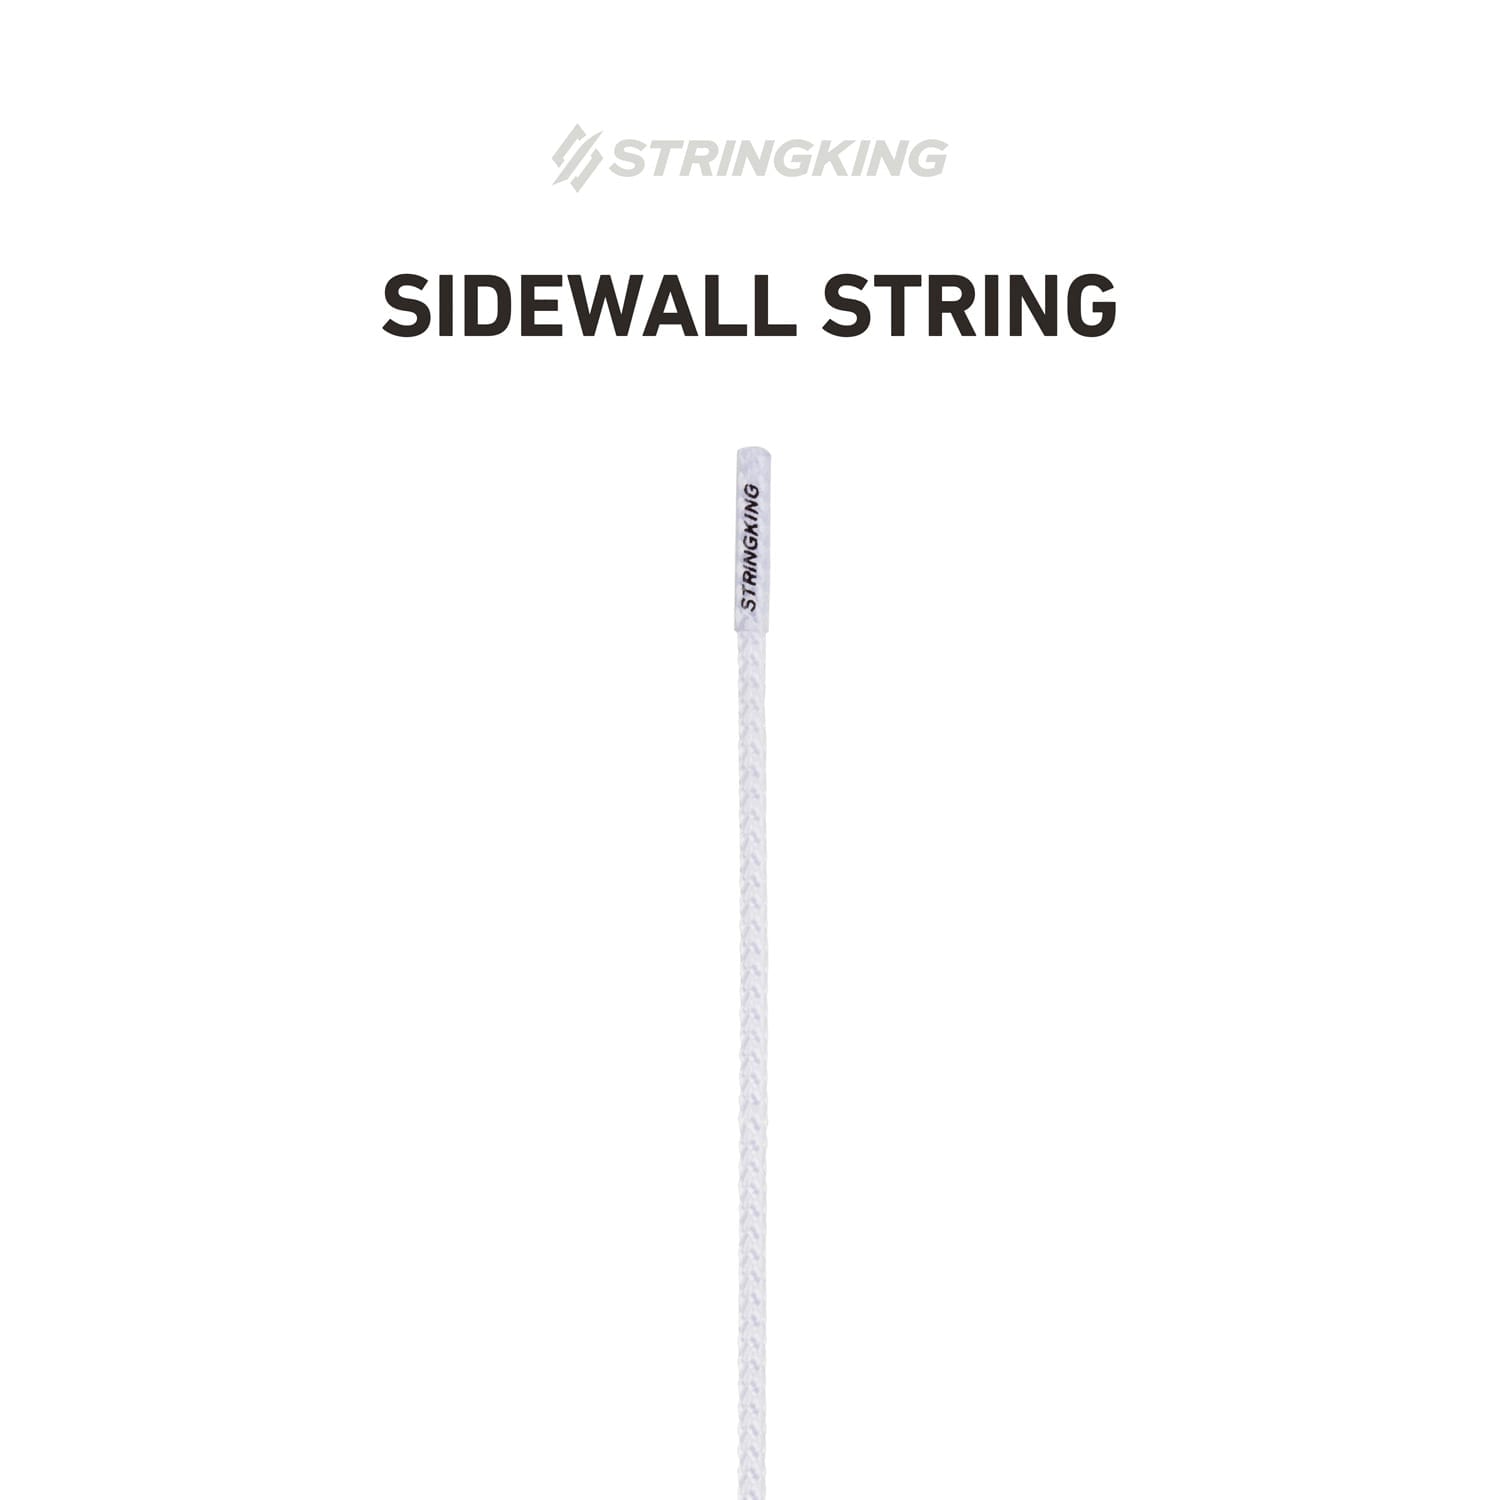 sidewall-string-specialty-retailers-white.jpg